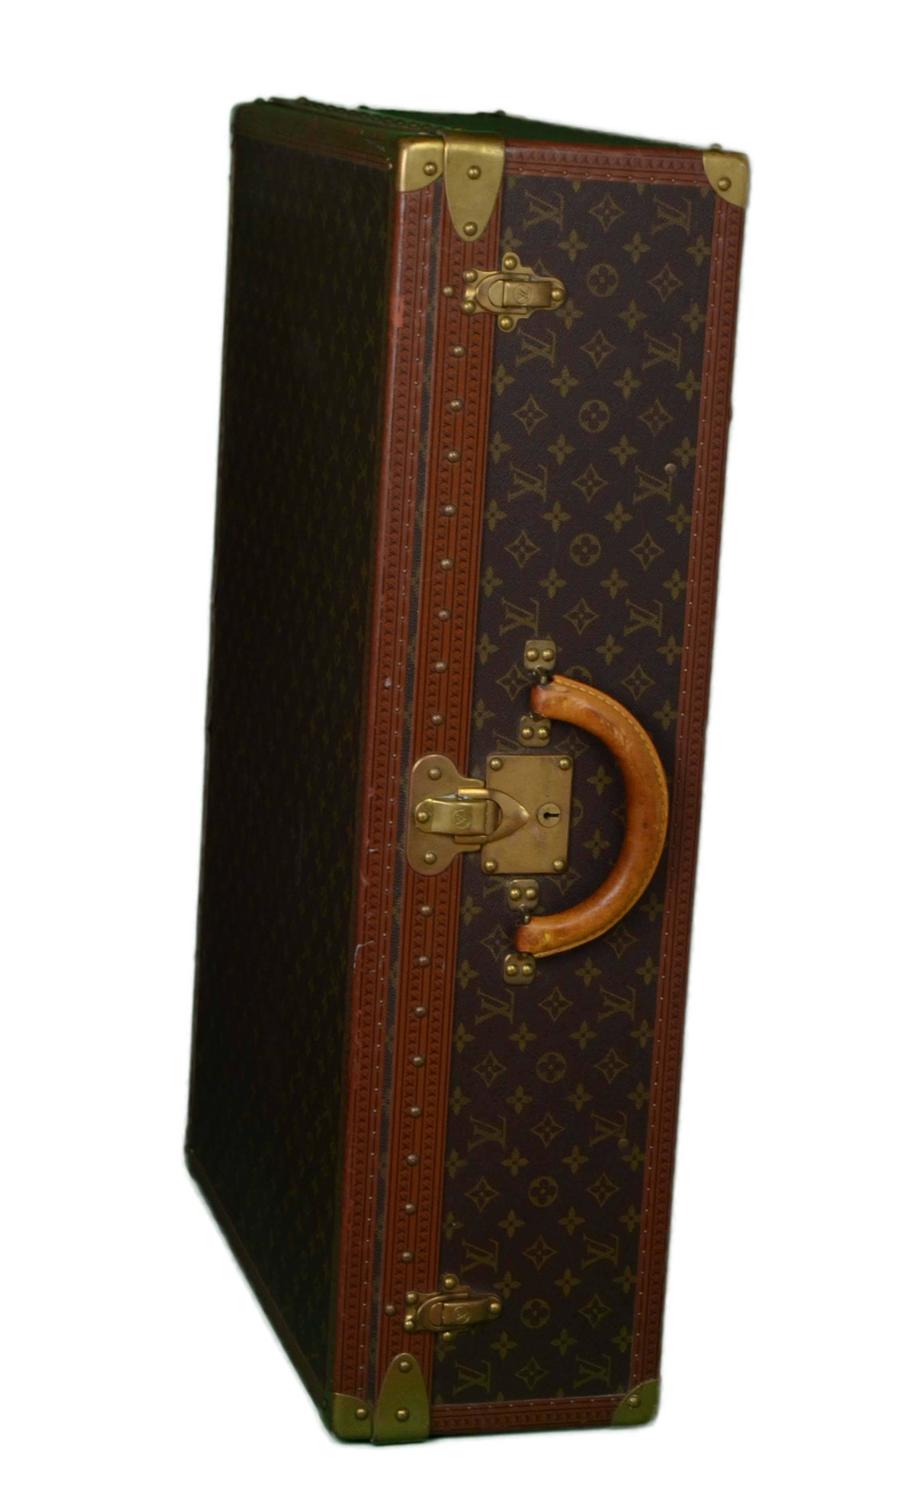 Louis Vuitton Vintage Monogram Hard Suitcase BHW For Sale at 1stdibs